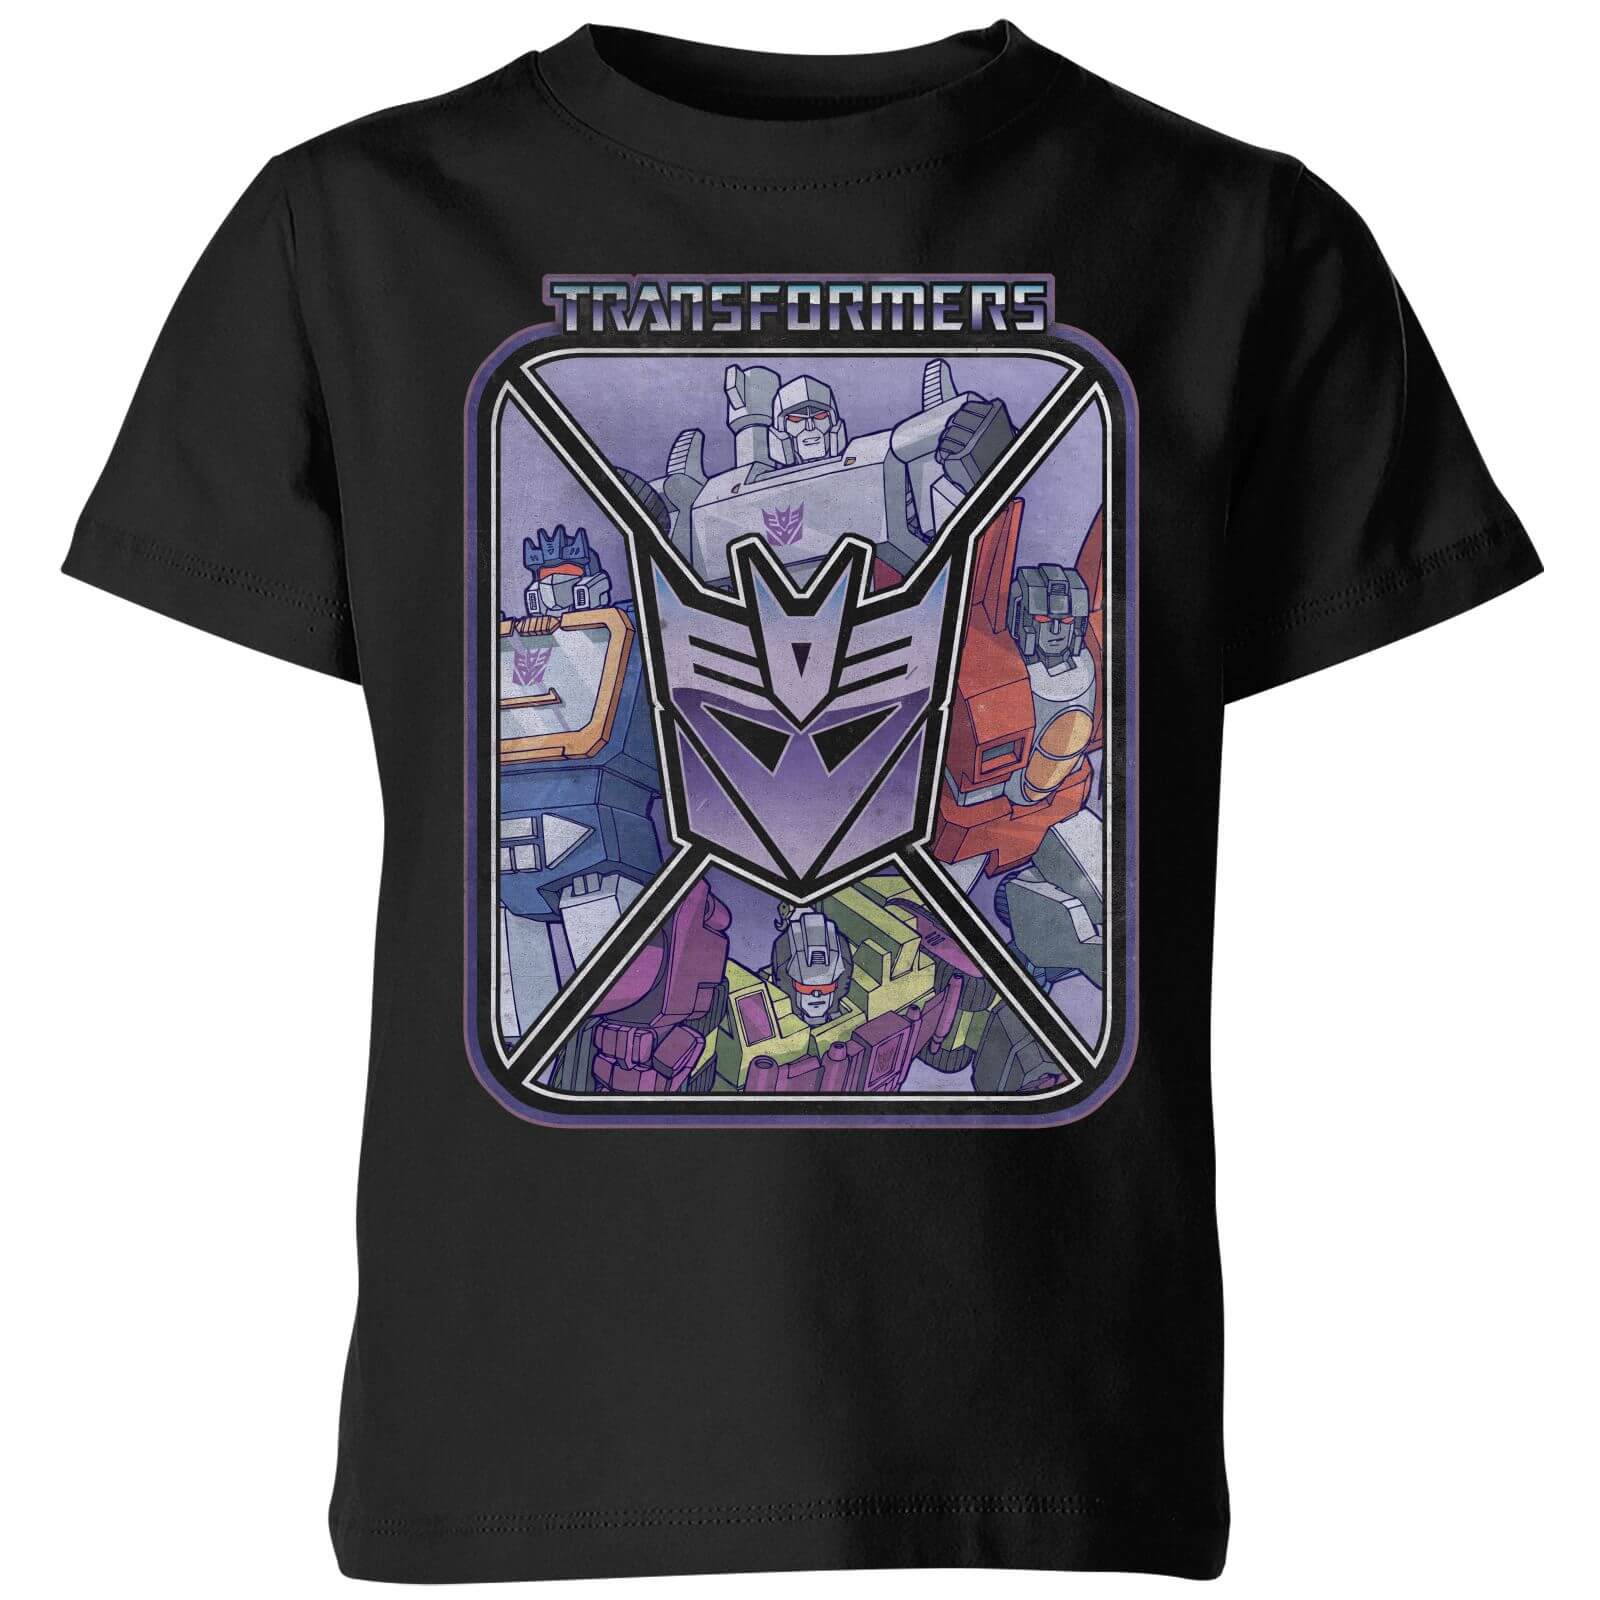 Transformers Decepticons Kids' T-Shirt - Black - 5-6 Years - Black